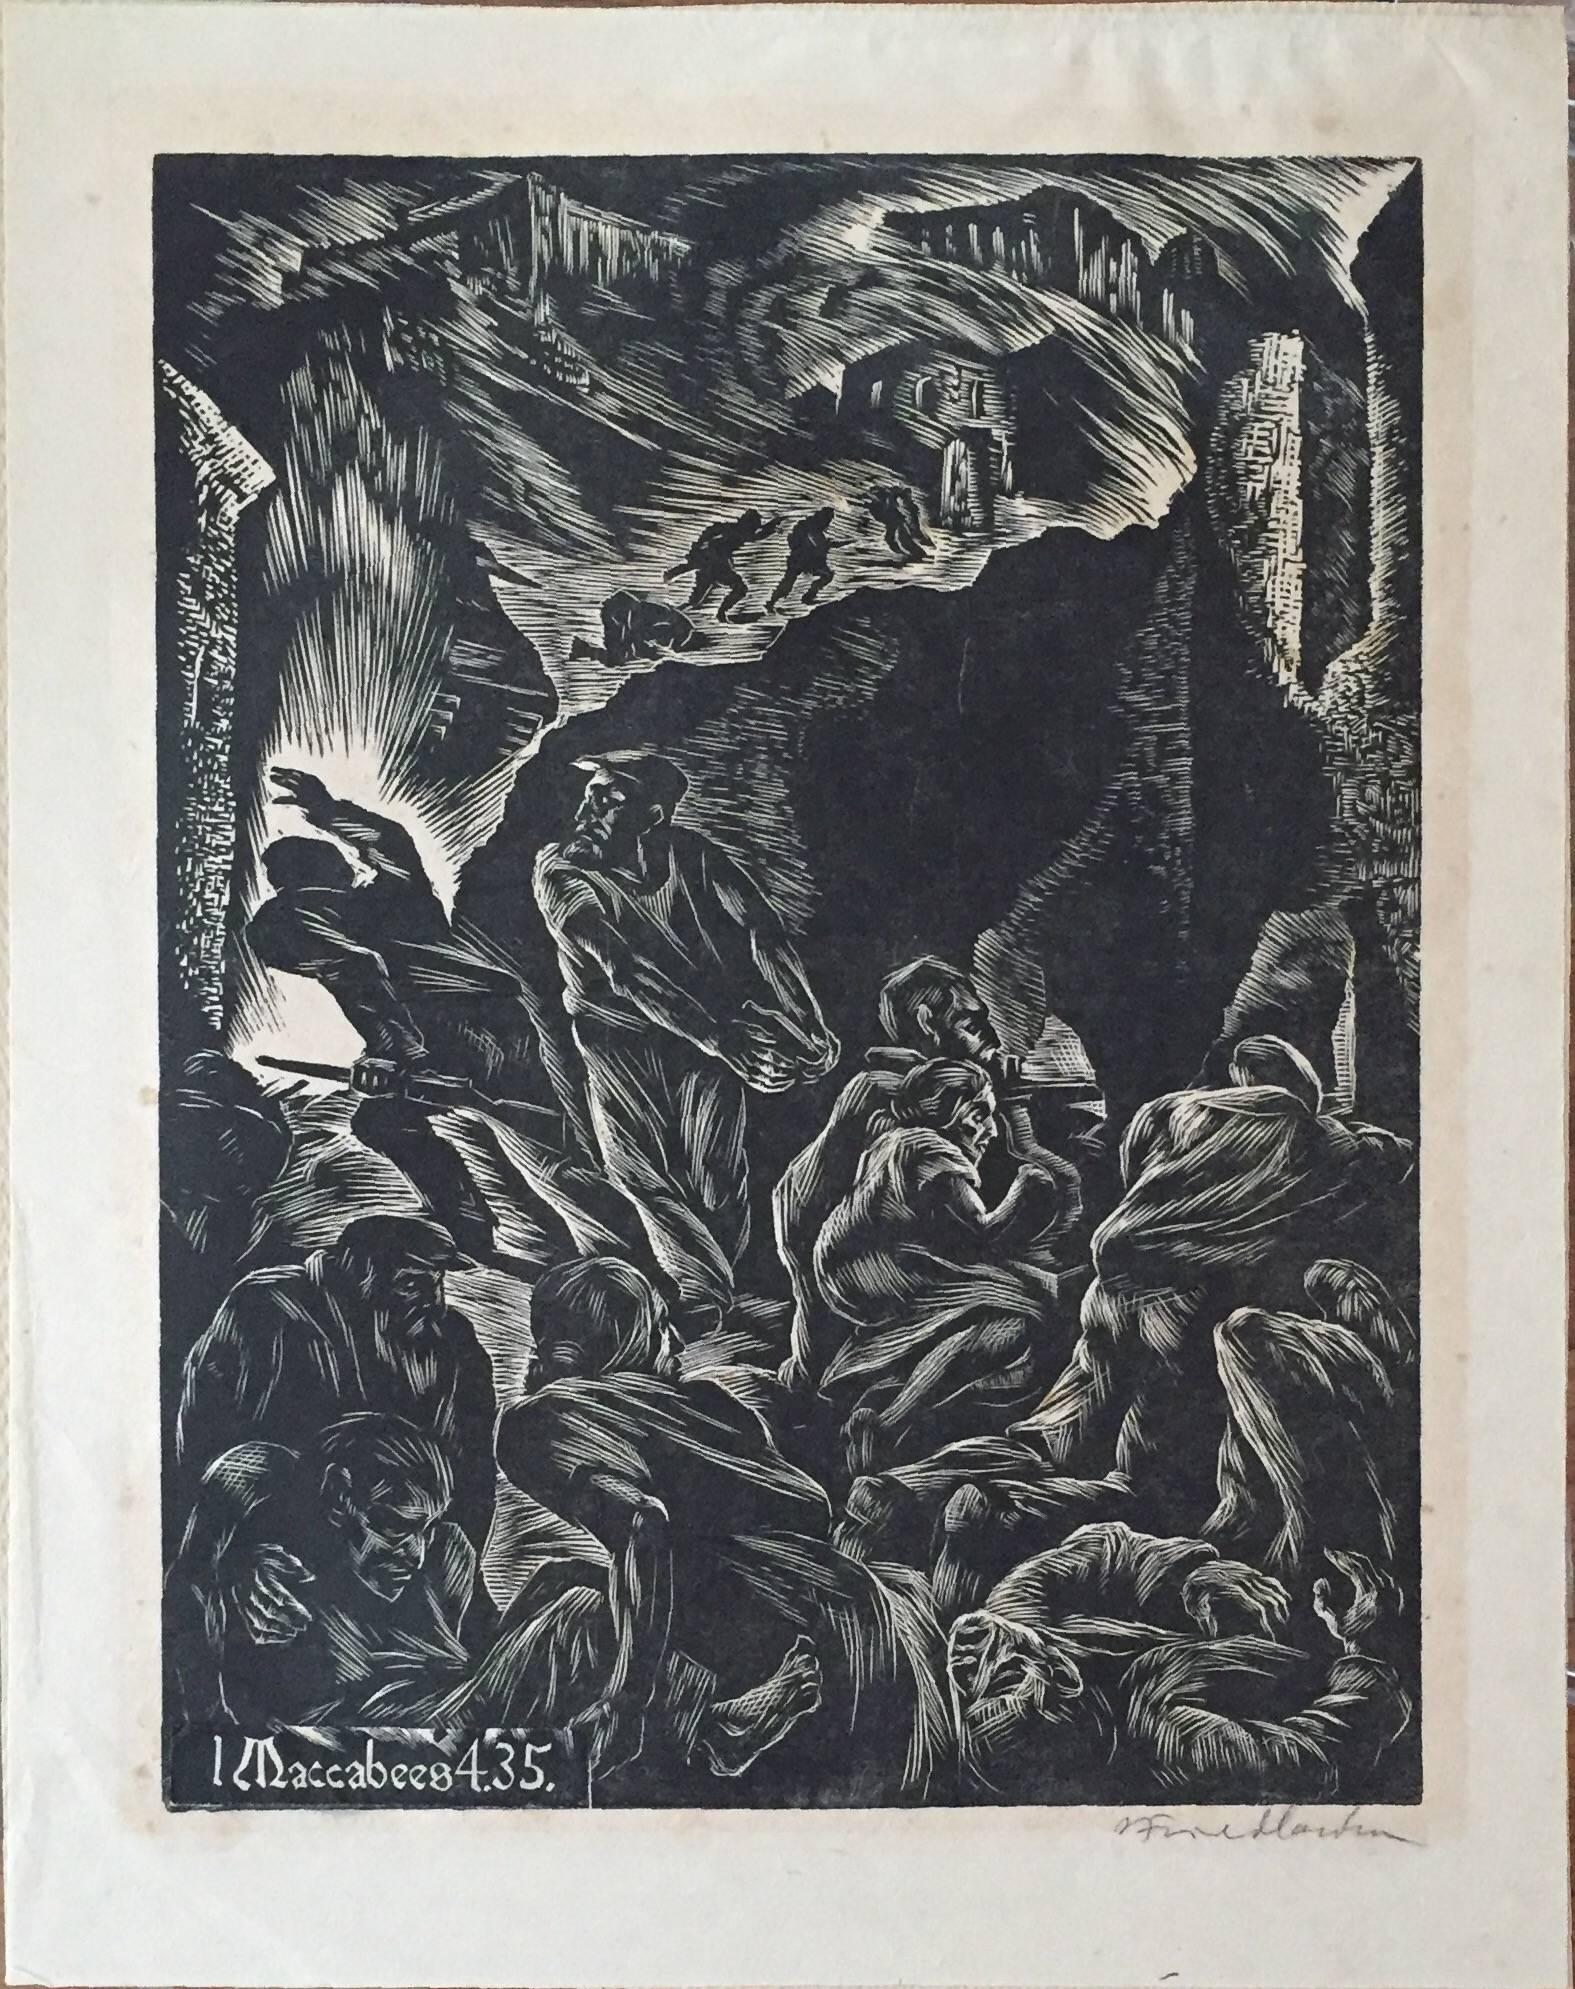 Albert Abramovitz Figurative Print - Macaques 4.35.